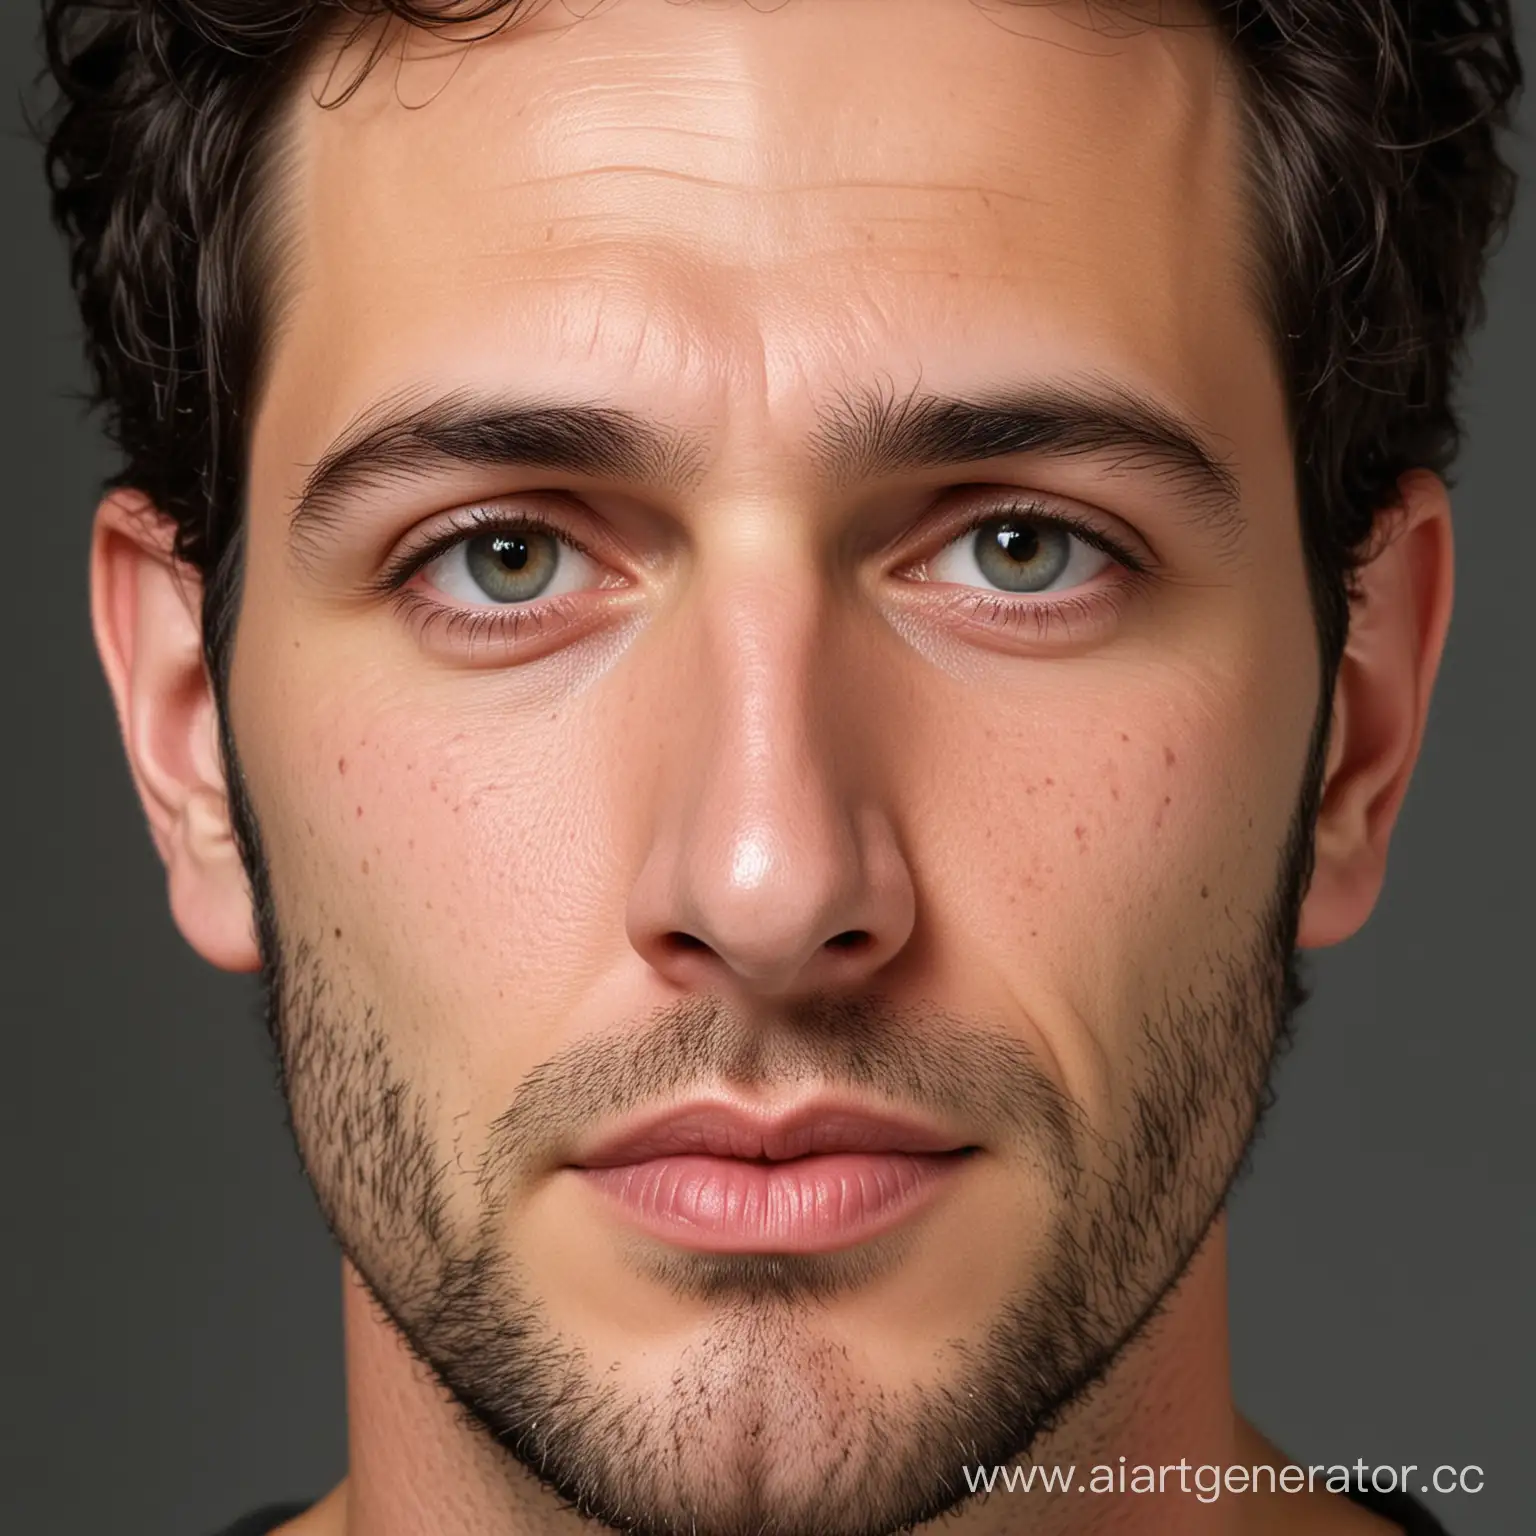 Man-with-Distinct-Facial-Features-and-Intense-Gaze